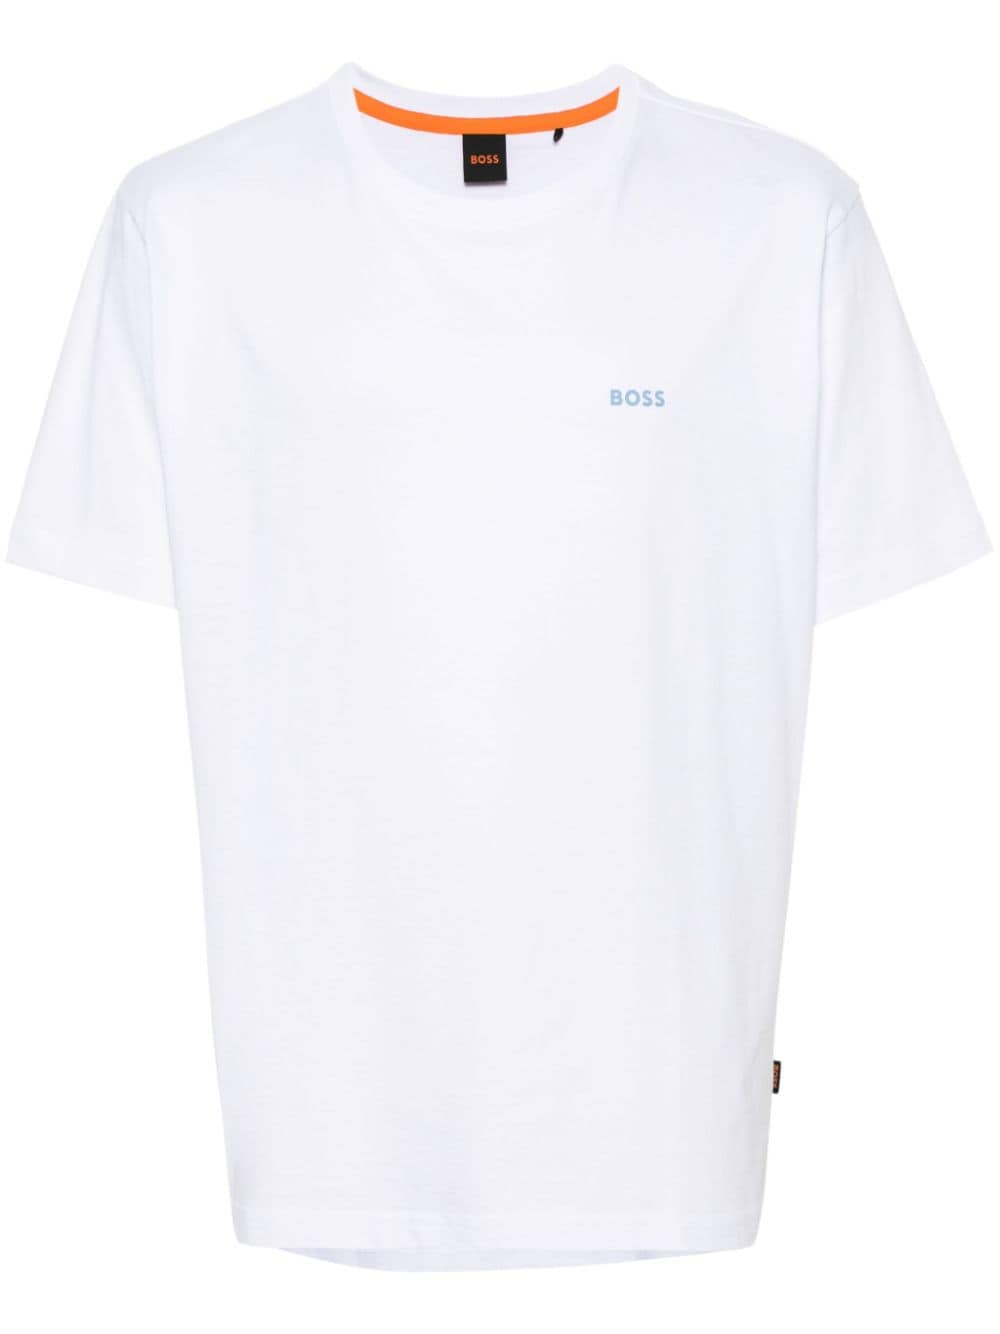 coral-print cotton T-shirt